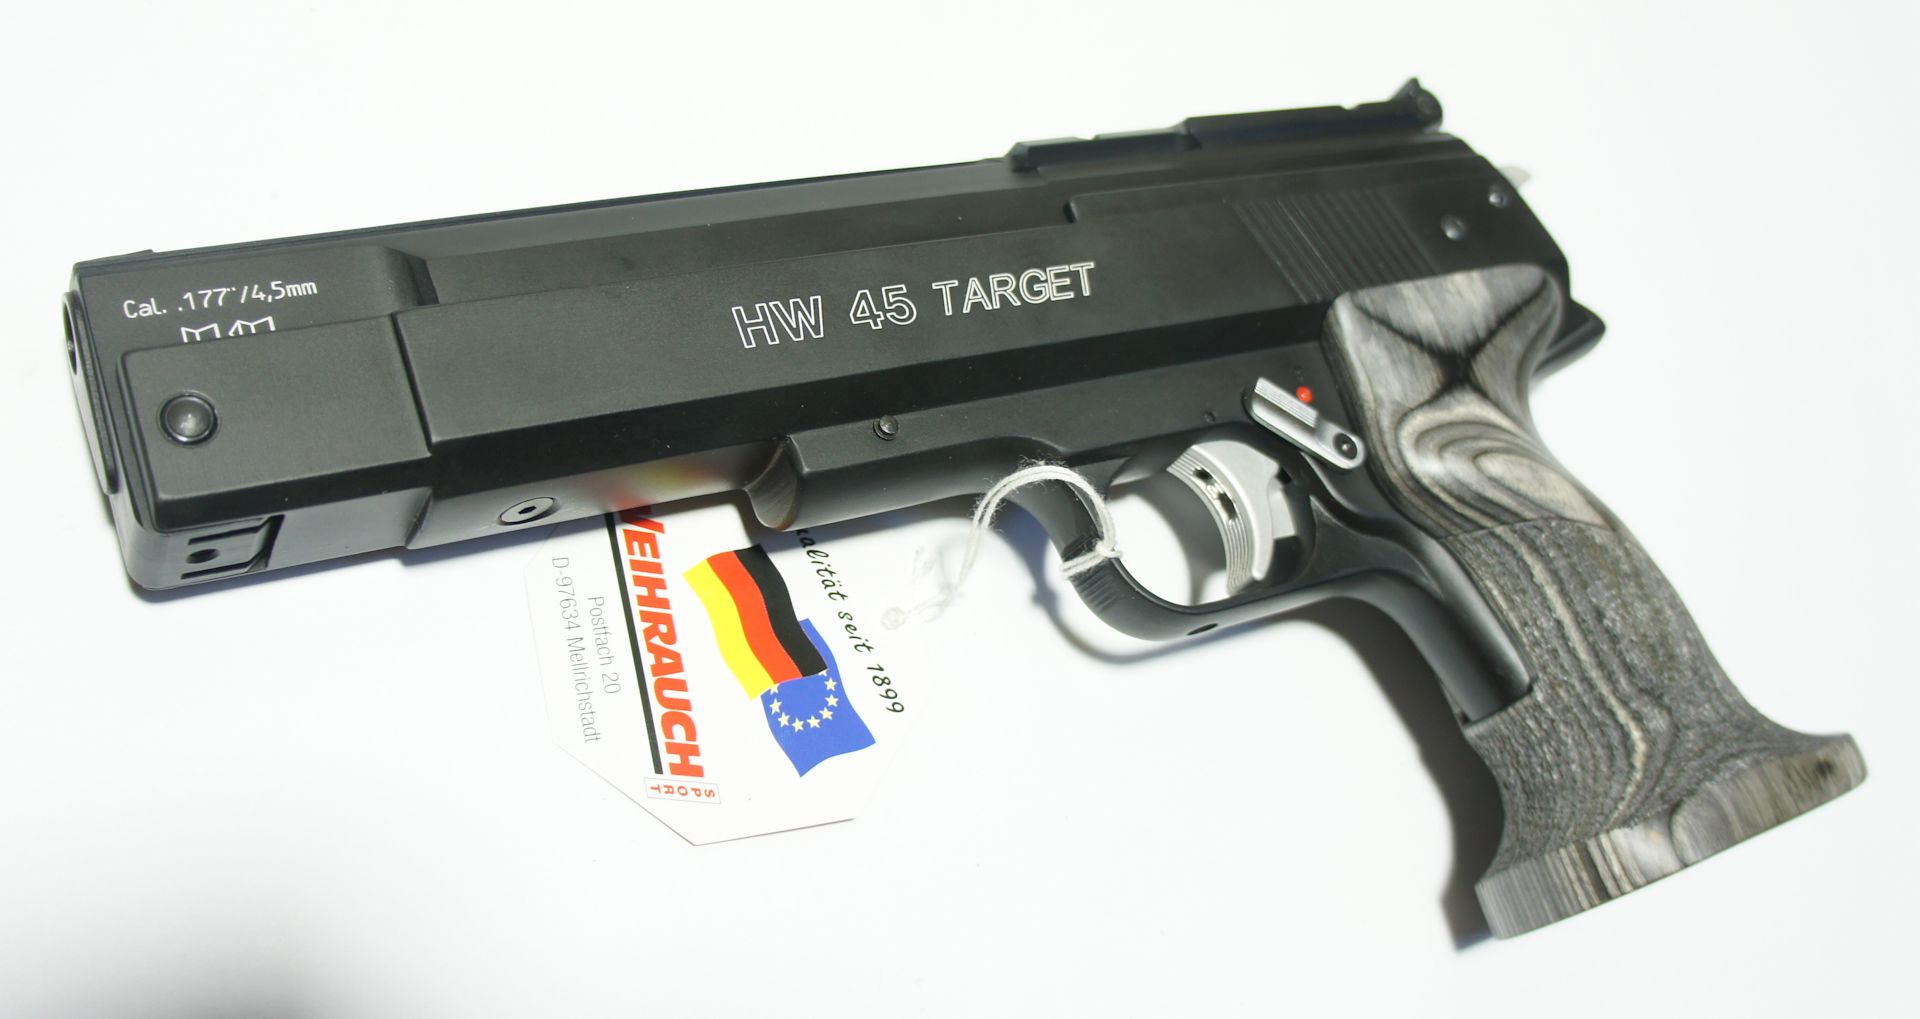 HW 45 Target Kaliber 5,5mm